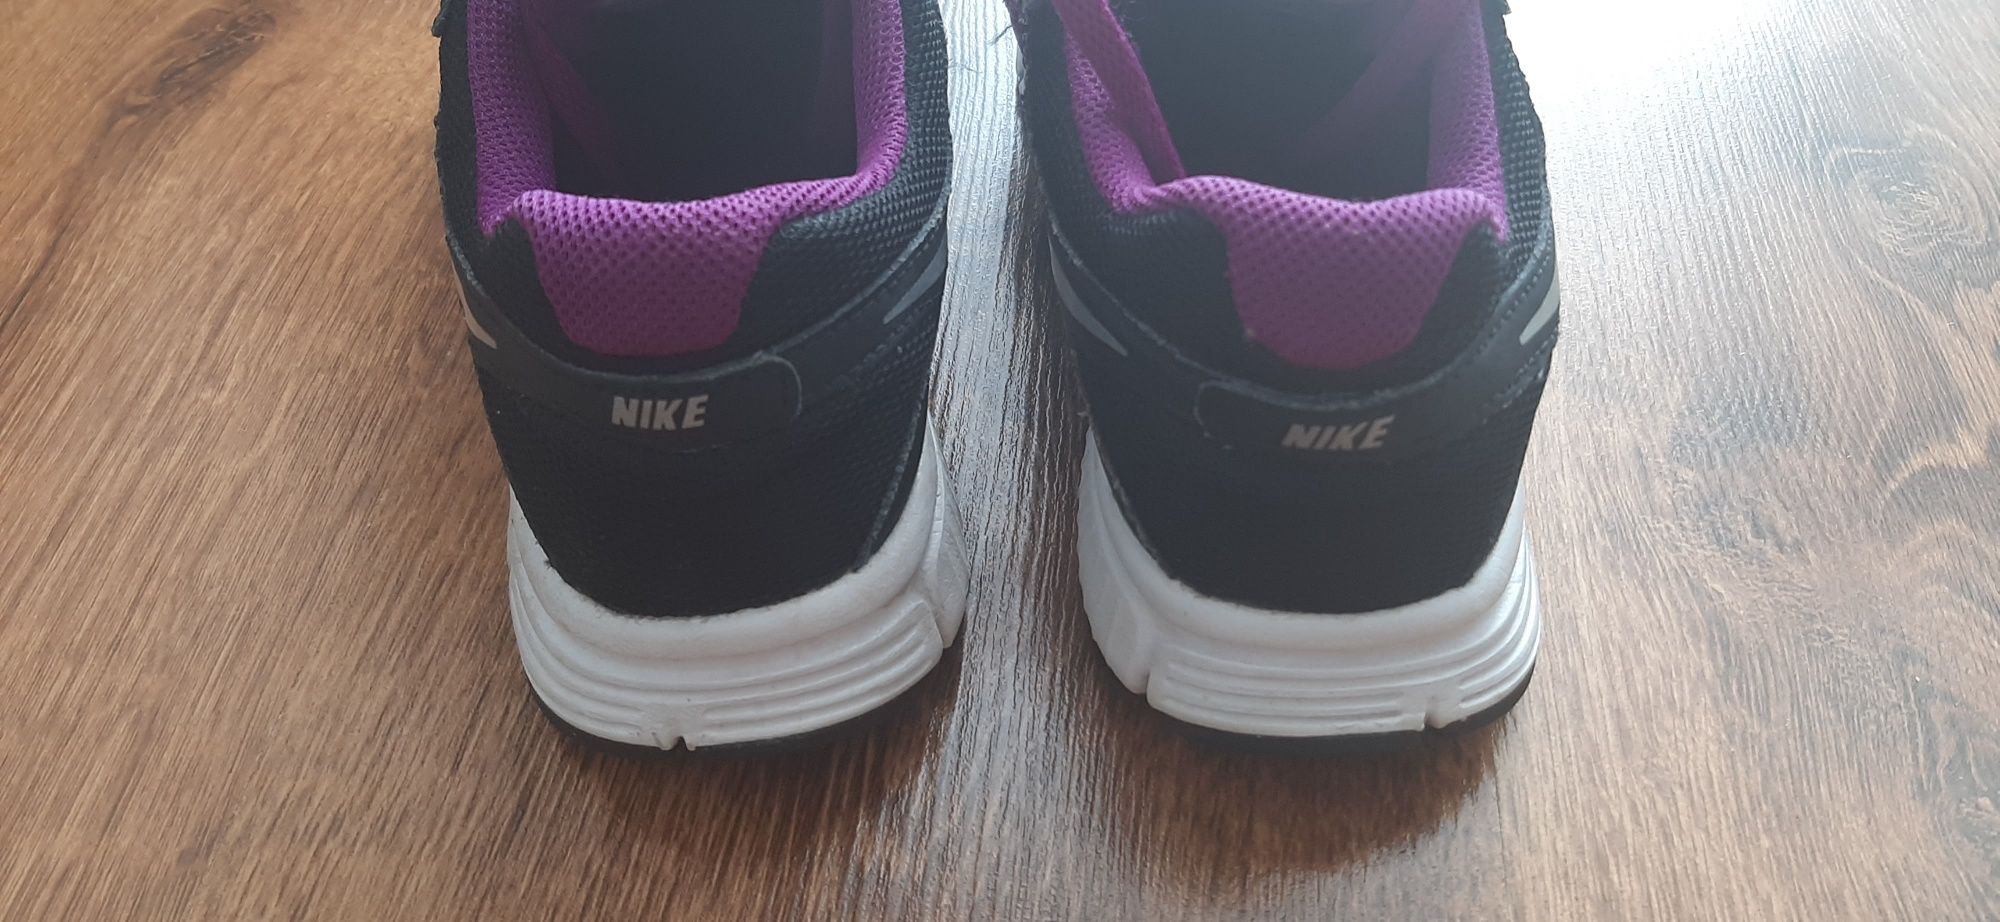 Czarno-fioletowe adidasy Nike